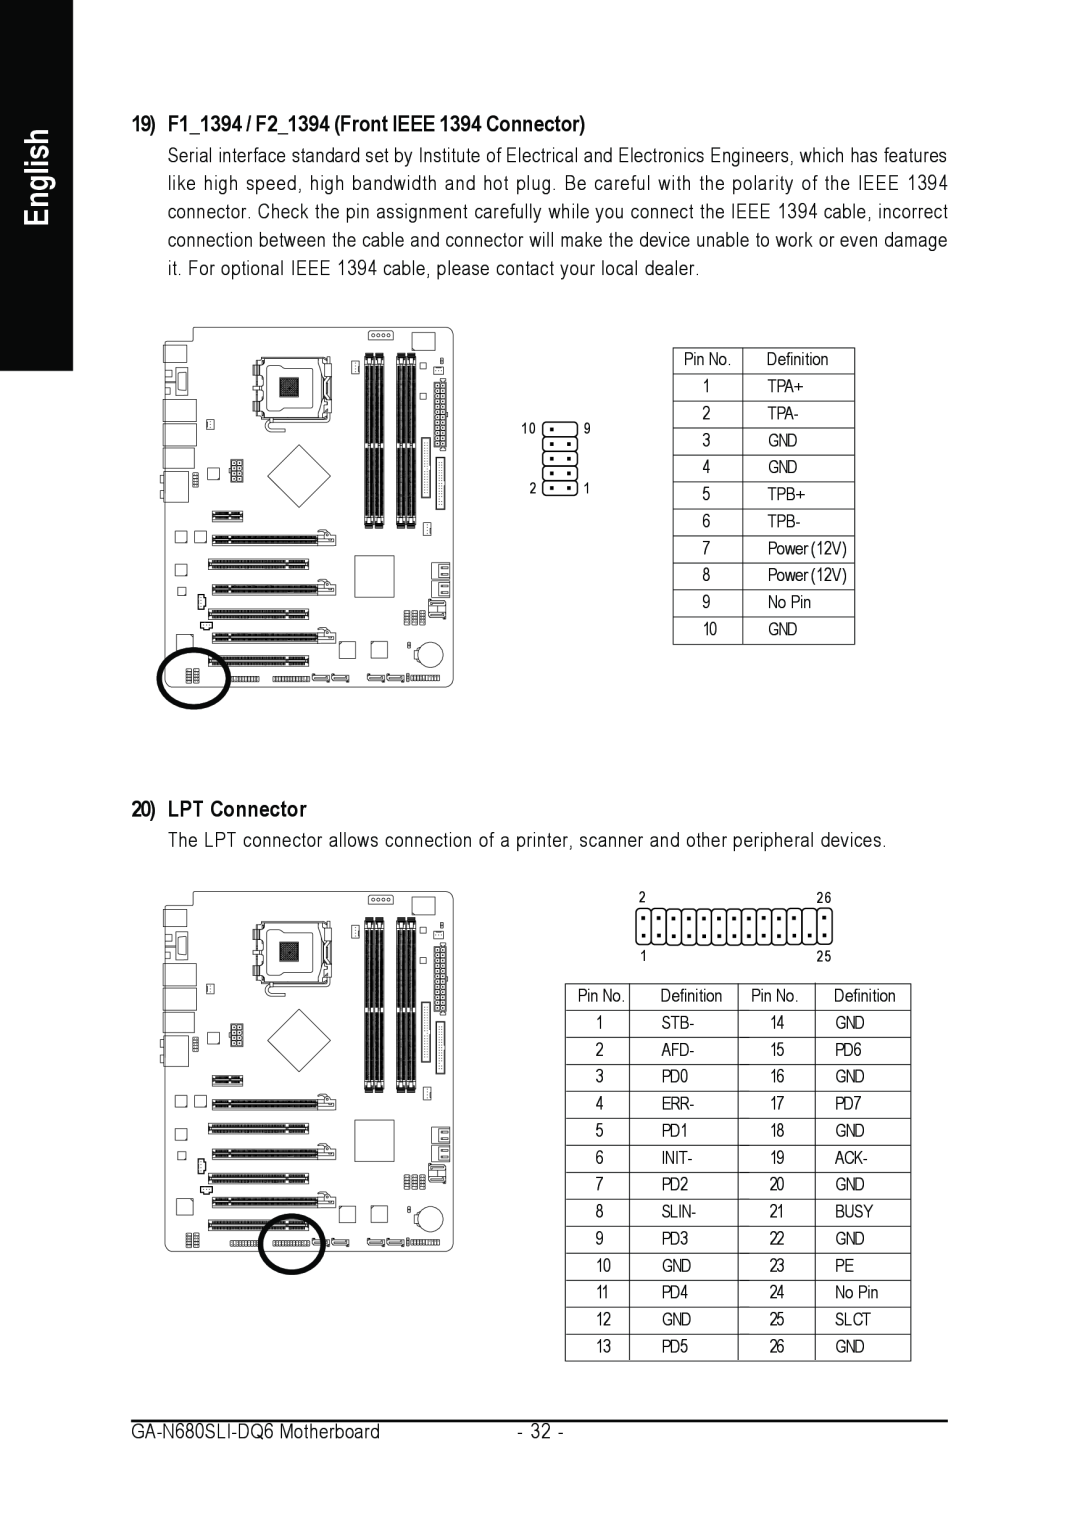 Intel GA-N680SLI-DQ6 user manual 19 F11394 / F21394 Front IEEE 1394 Connector, LPT Connector, English 